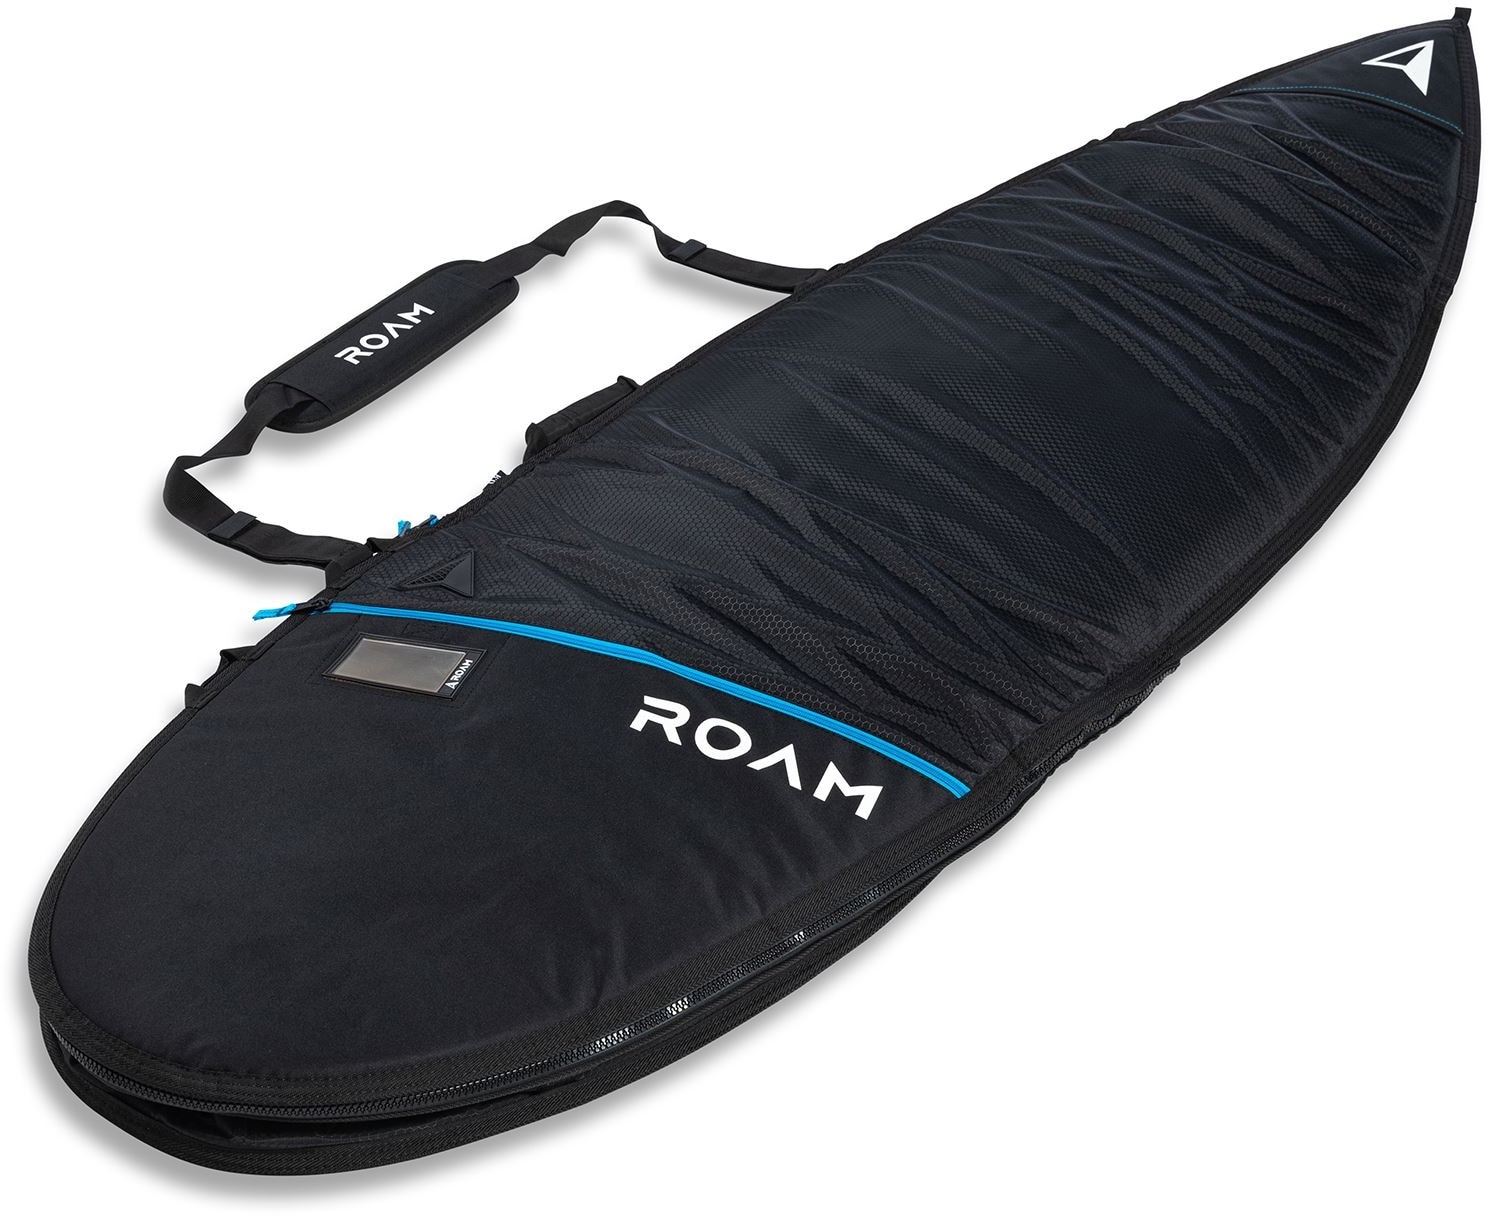 Roam Boardbag Surfboard Tech Bag Short Plus bag travel reise, Länge in Fuß: 5.8, Breite in inch: 22